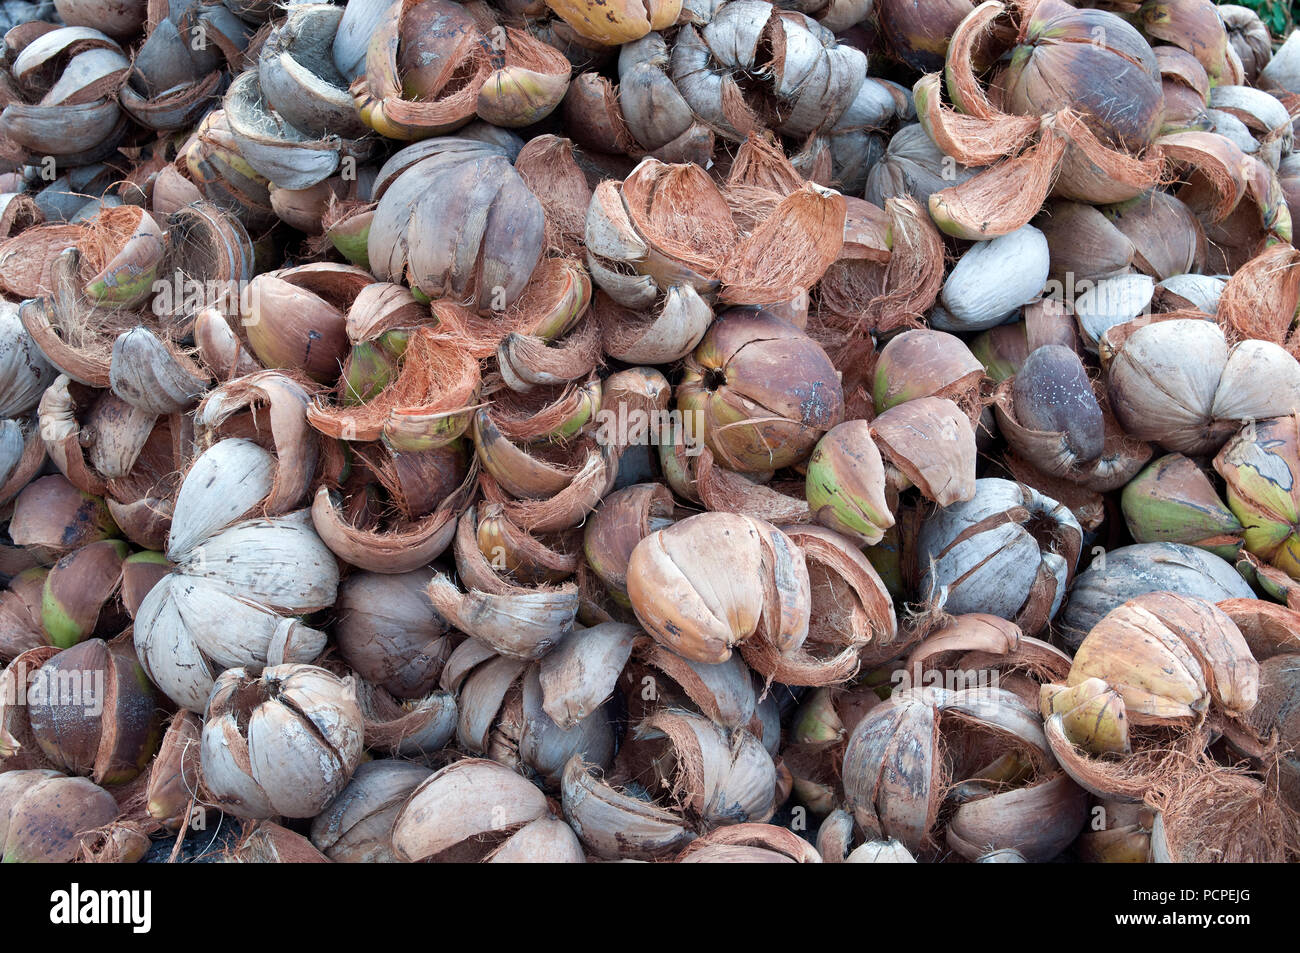 Thailand - Koh Samui - Coconut shells emptied for oil (Cocos nucifera) Stock Photo